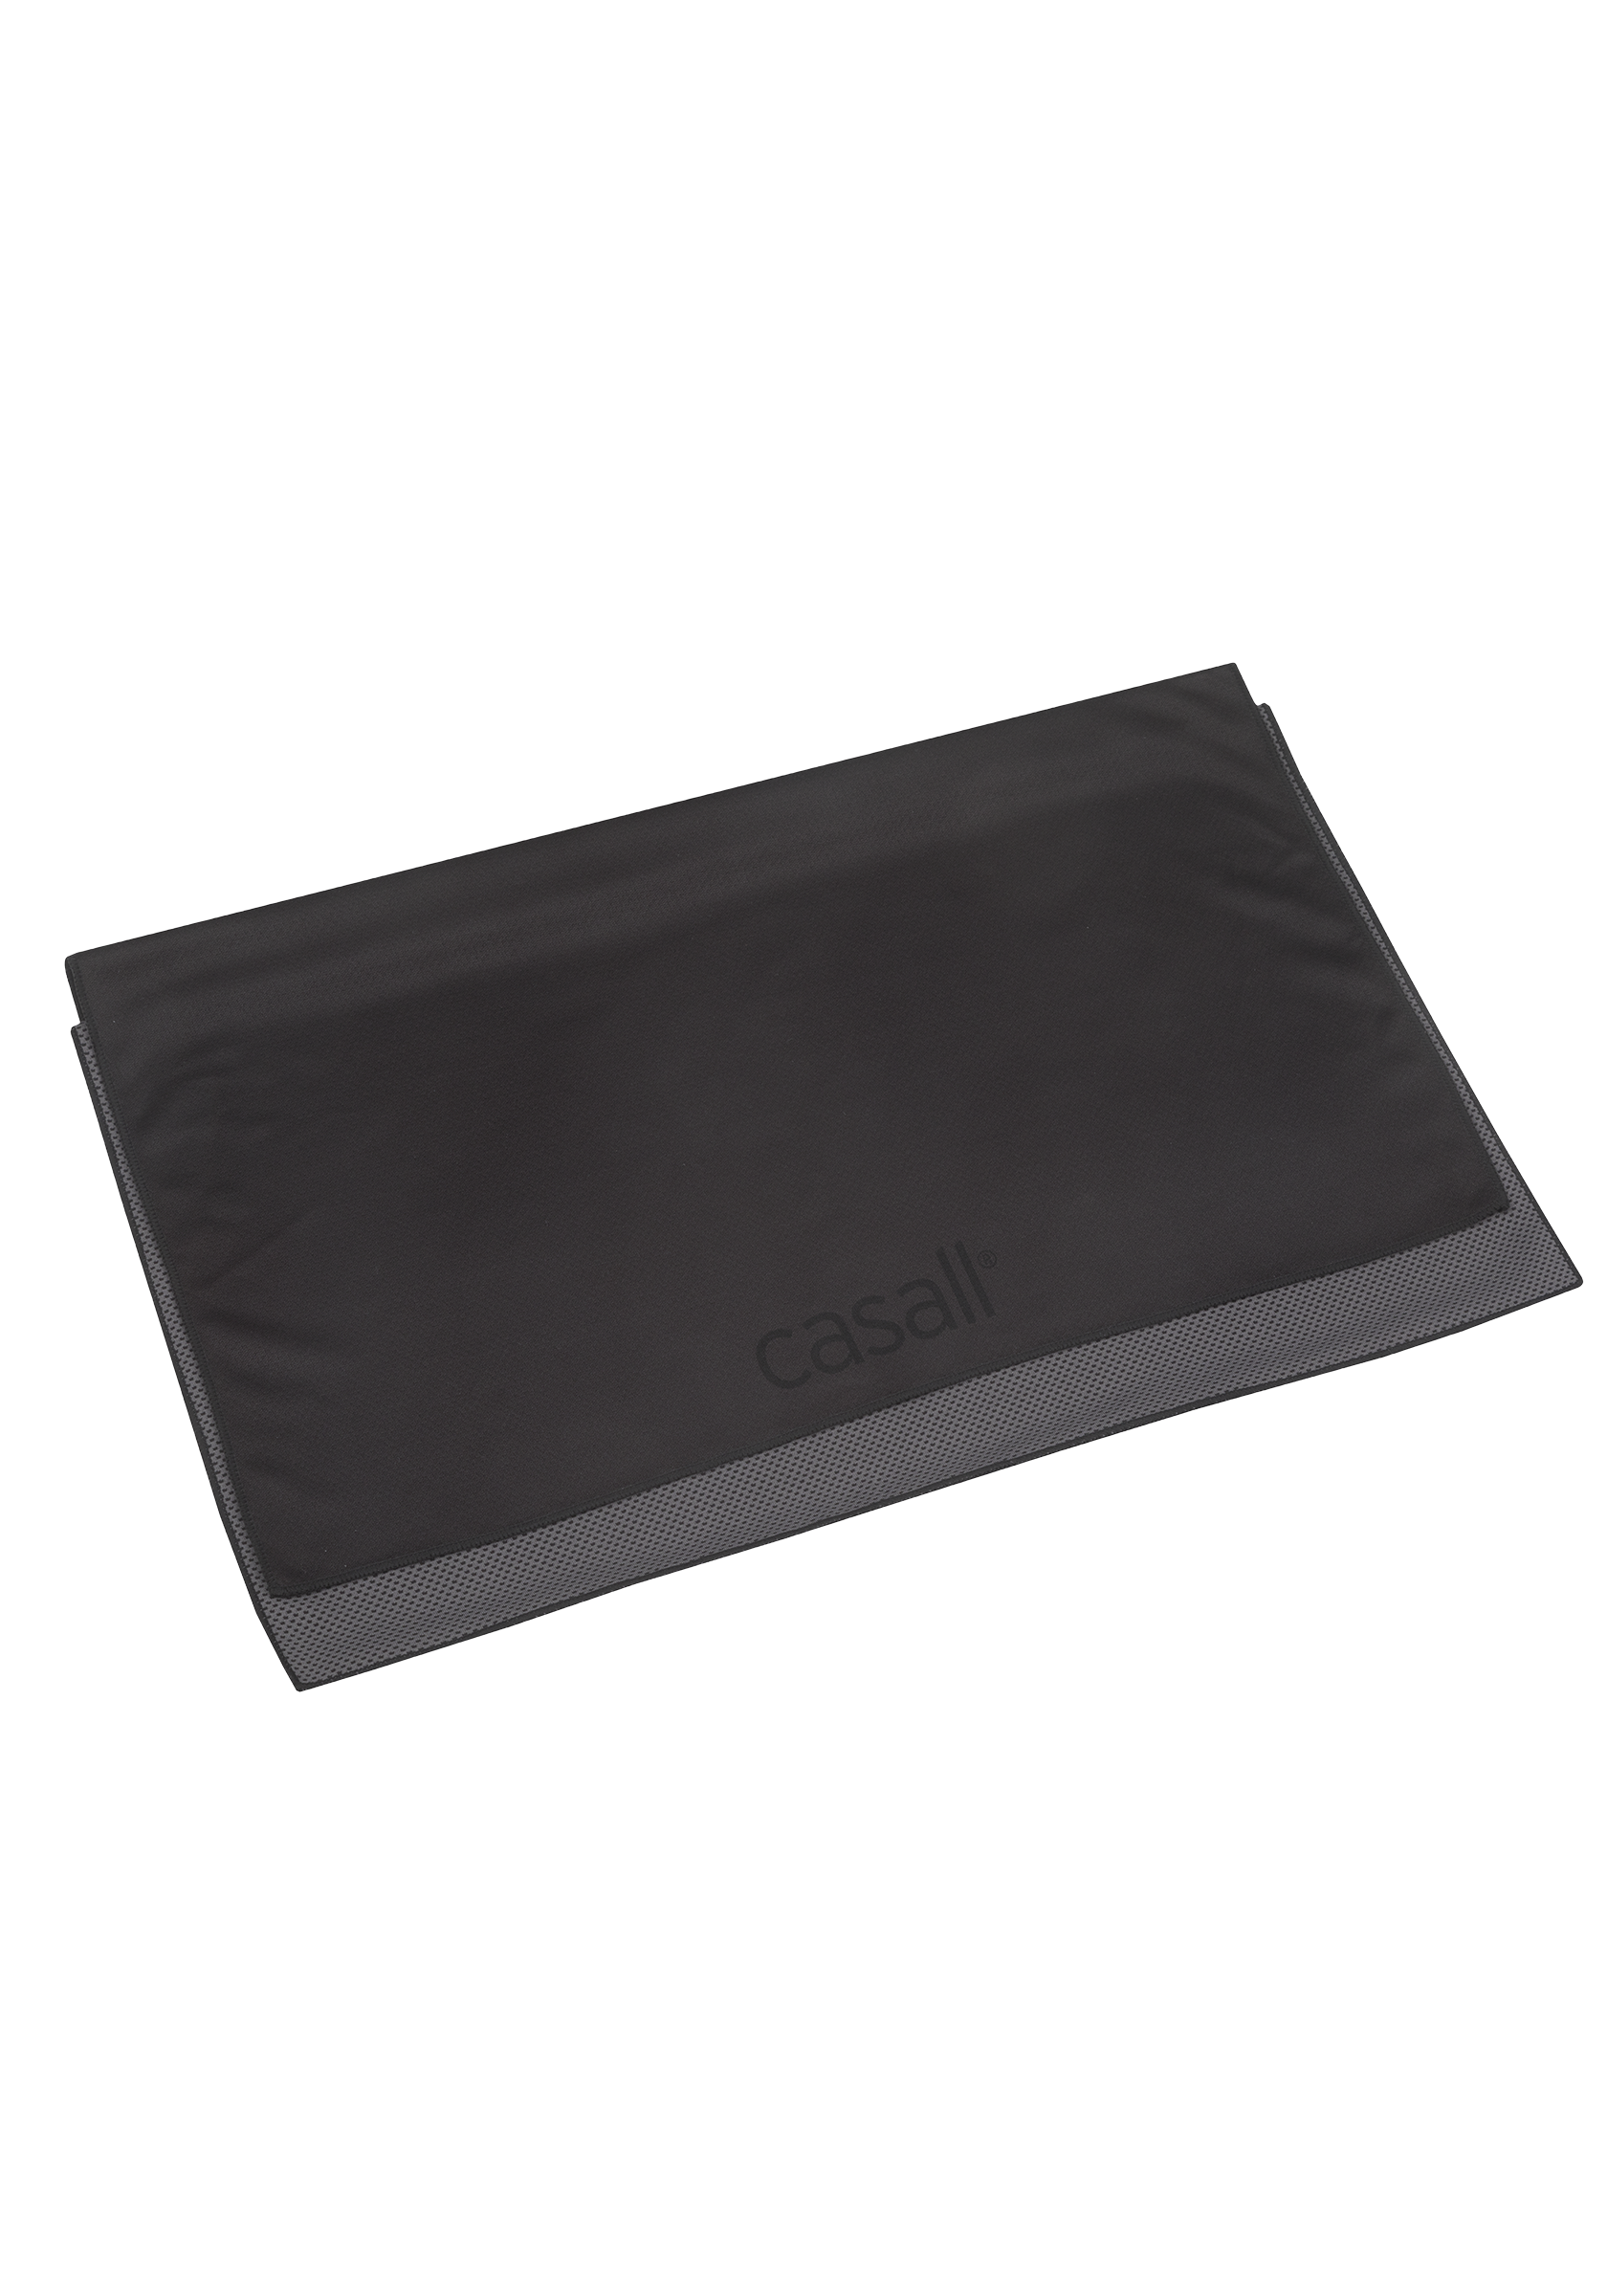 Travel towel 120x70cm – Black/grey